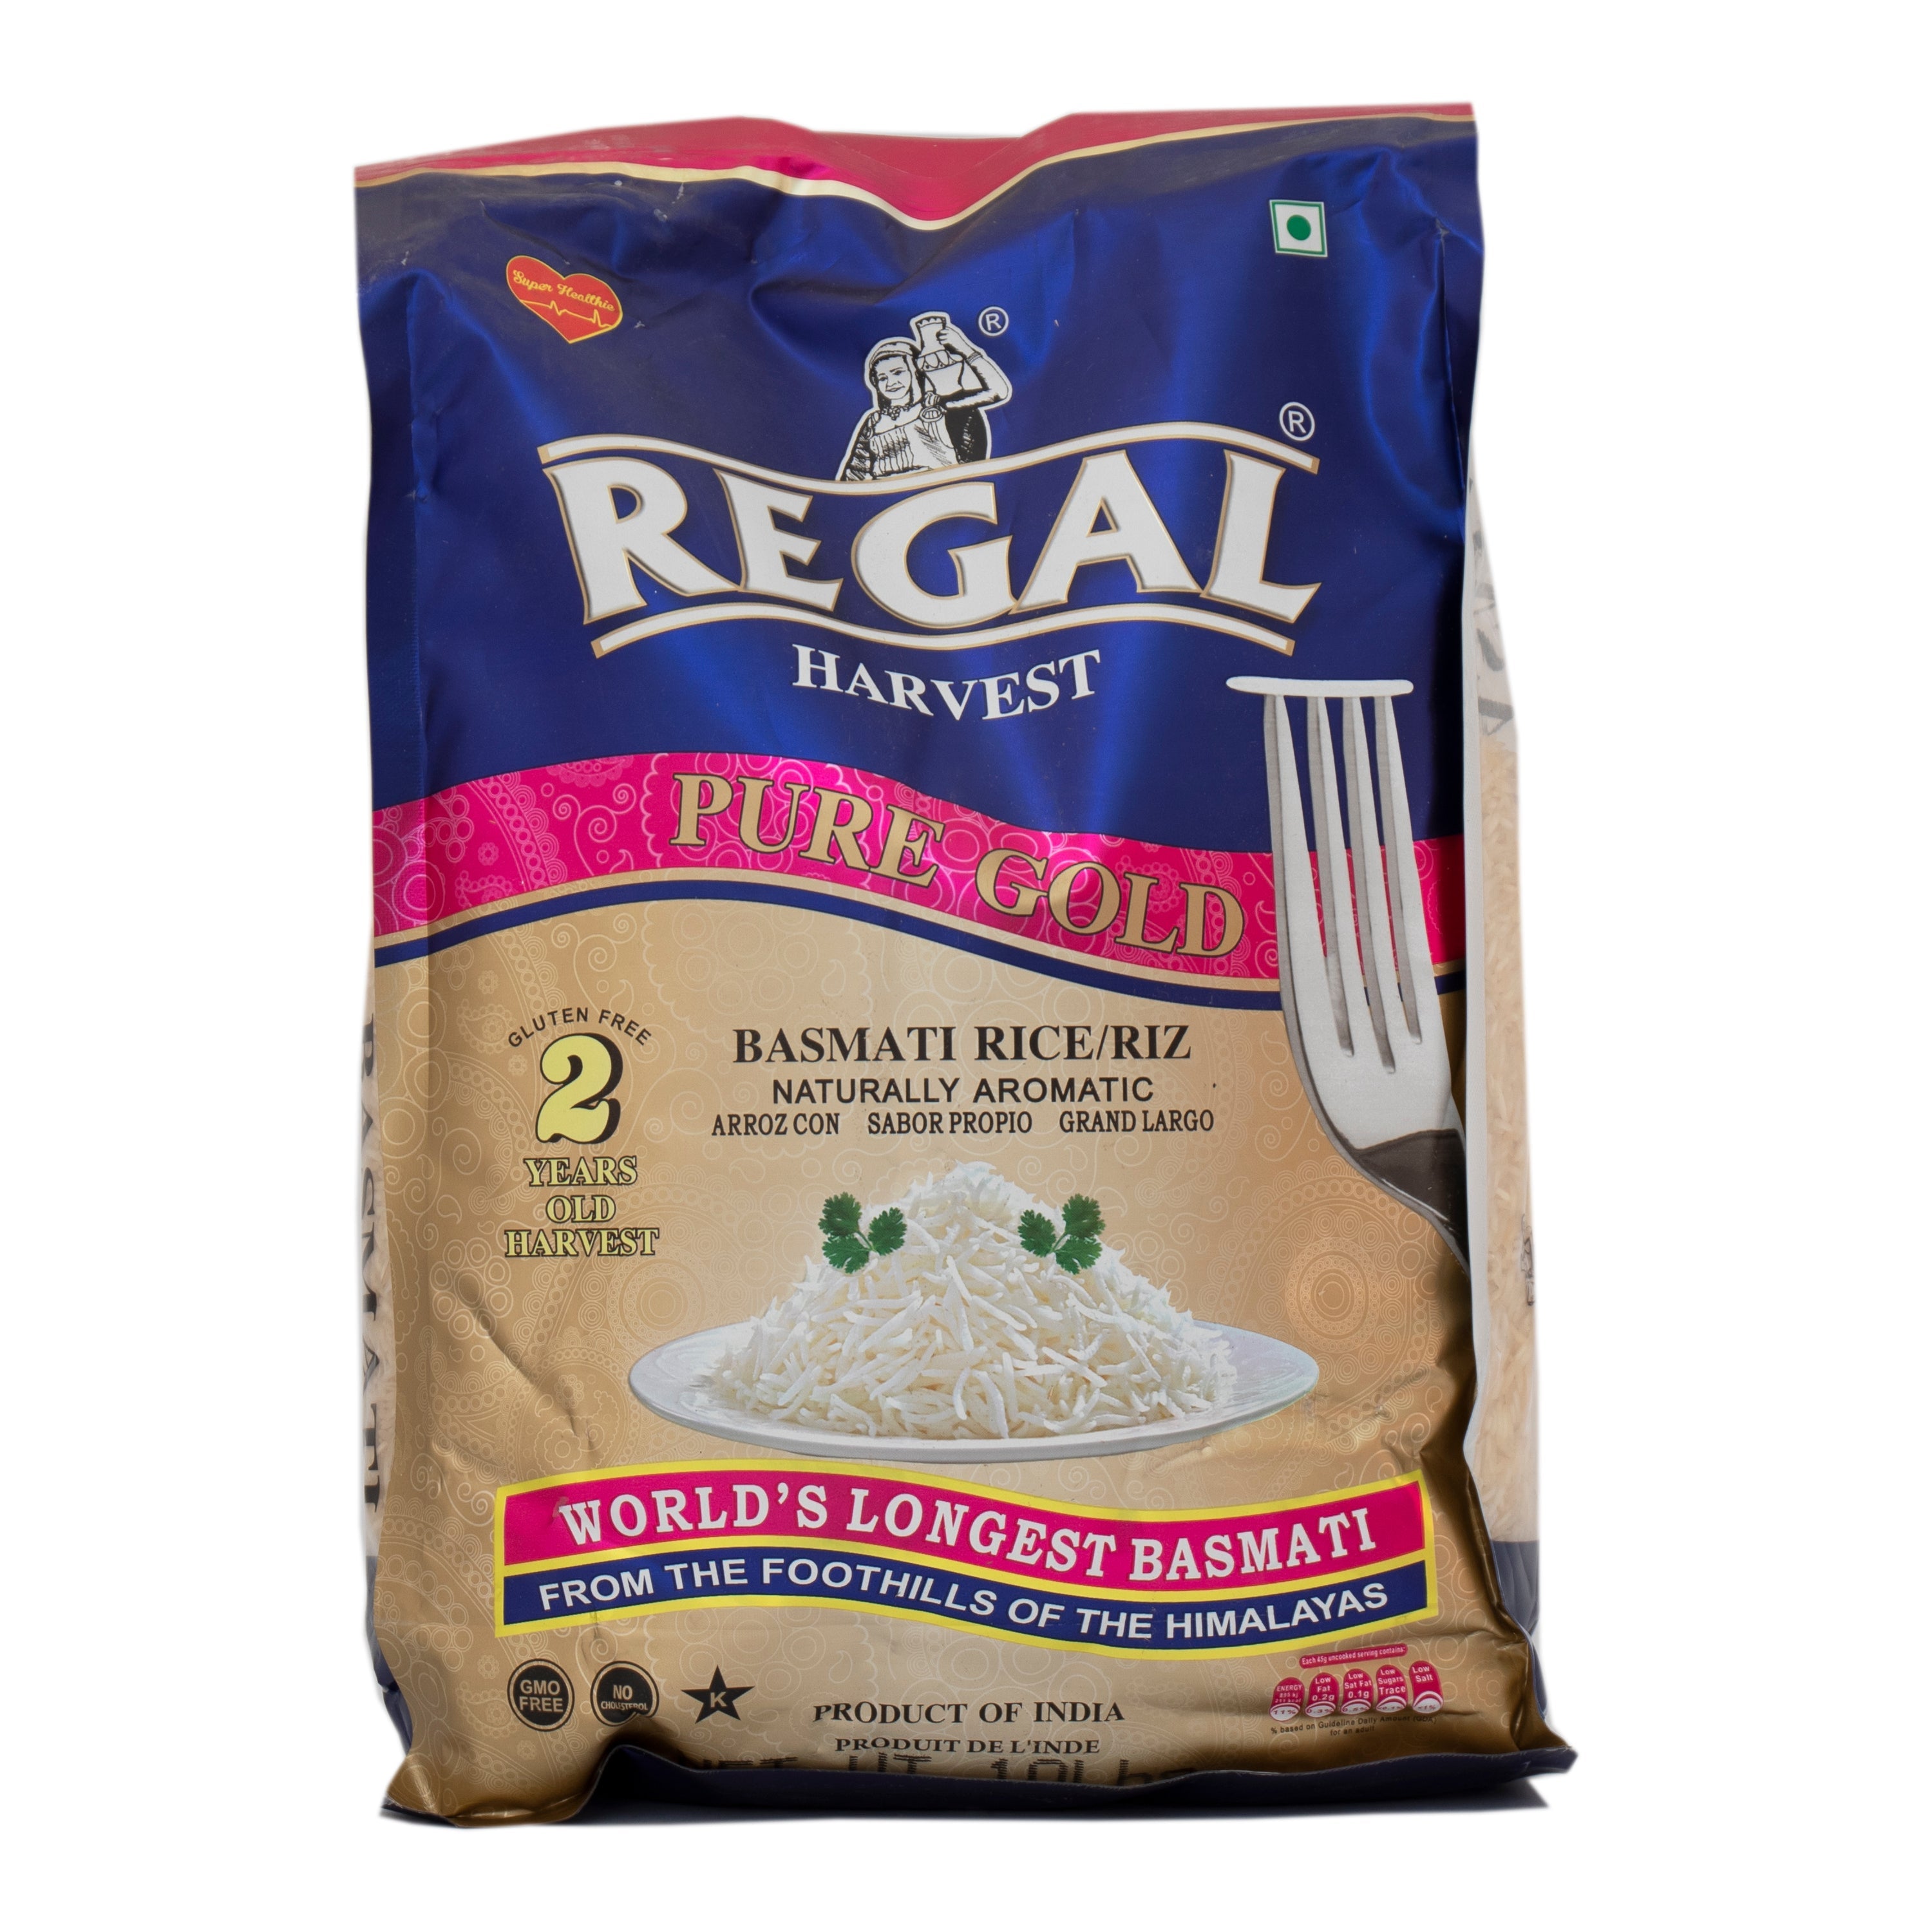 Regal Harvest Basmati Rice 10lb